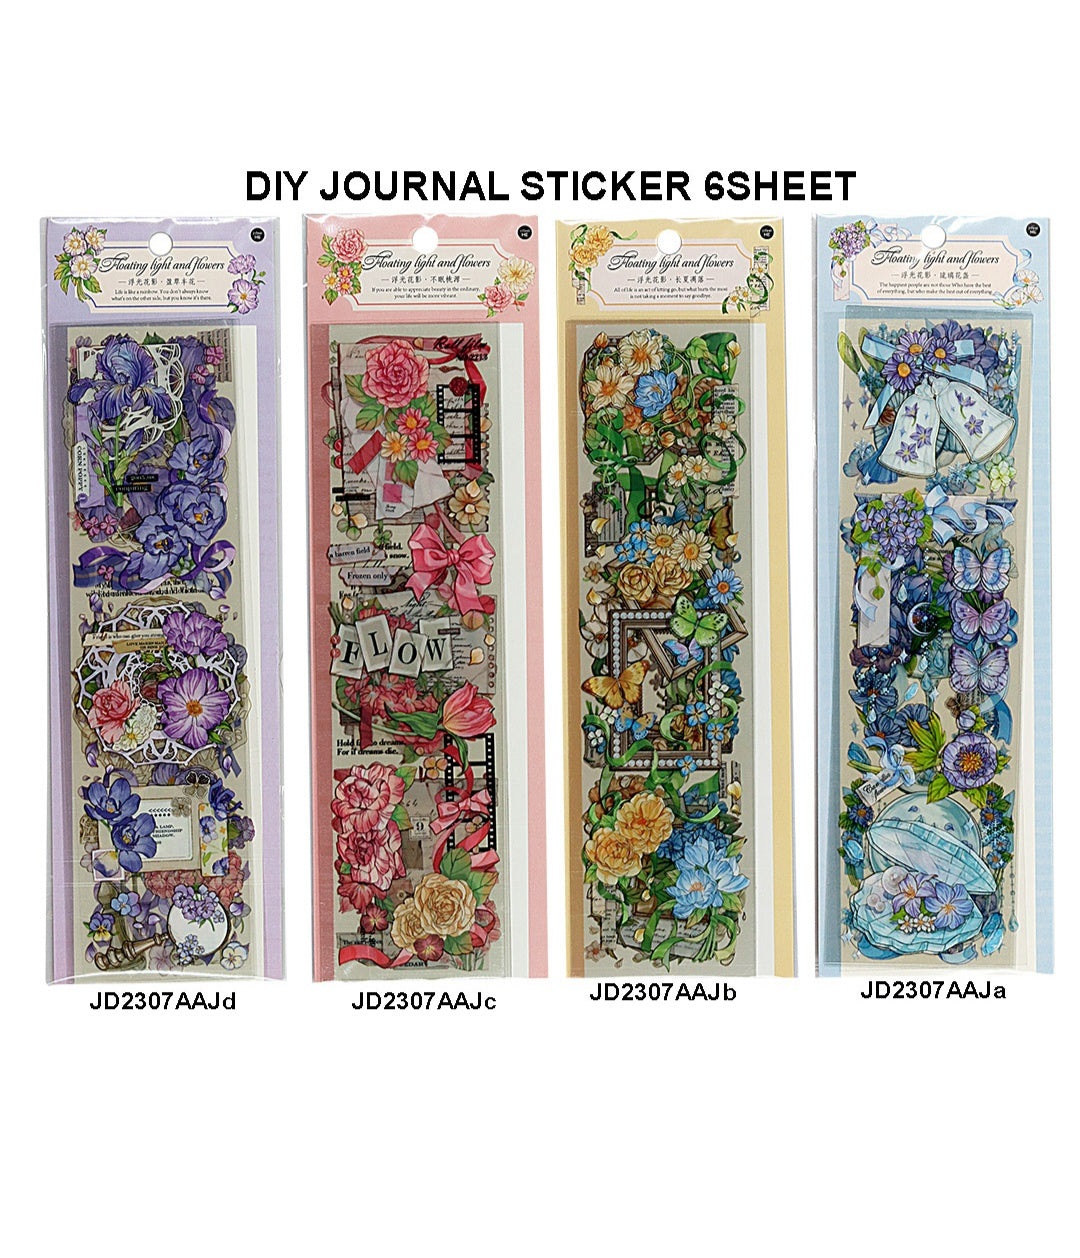 Diy Journal Sticker 6Sheet 247 Jd2307Aaj | INKARTO